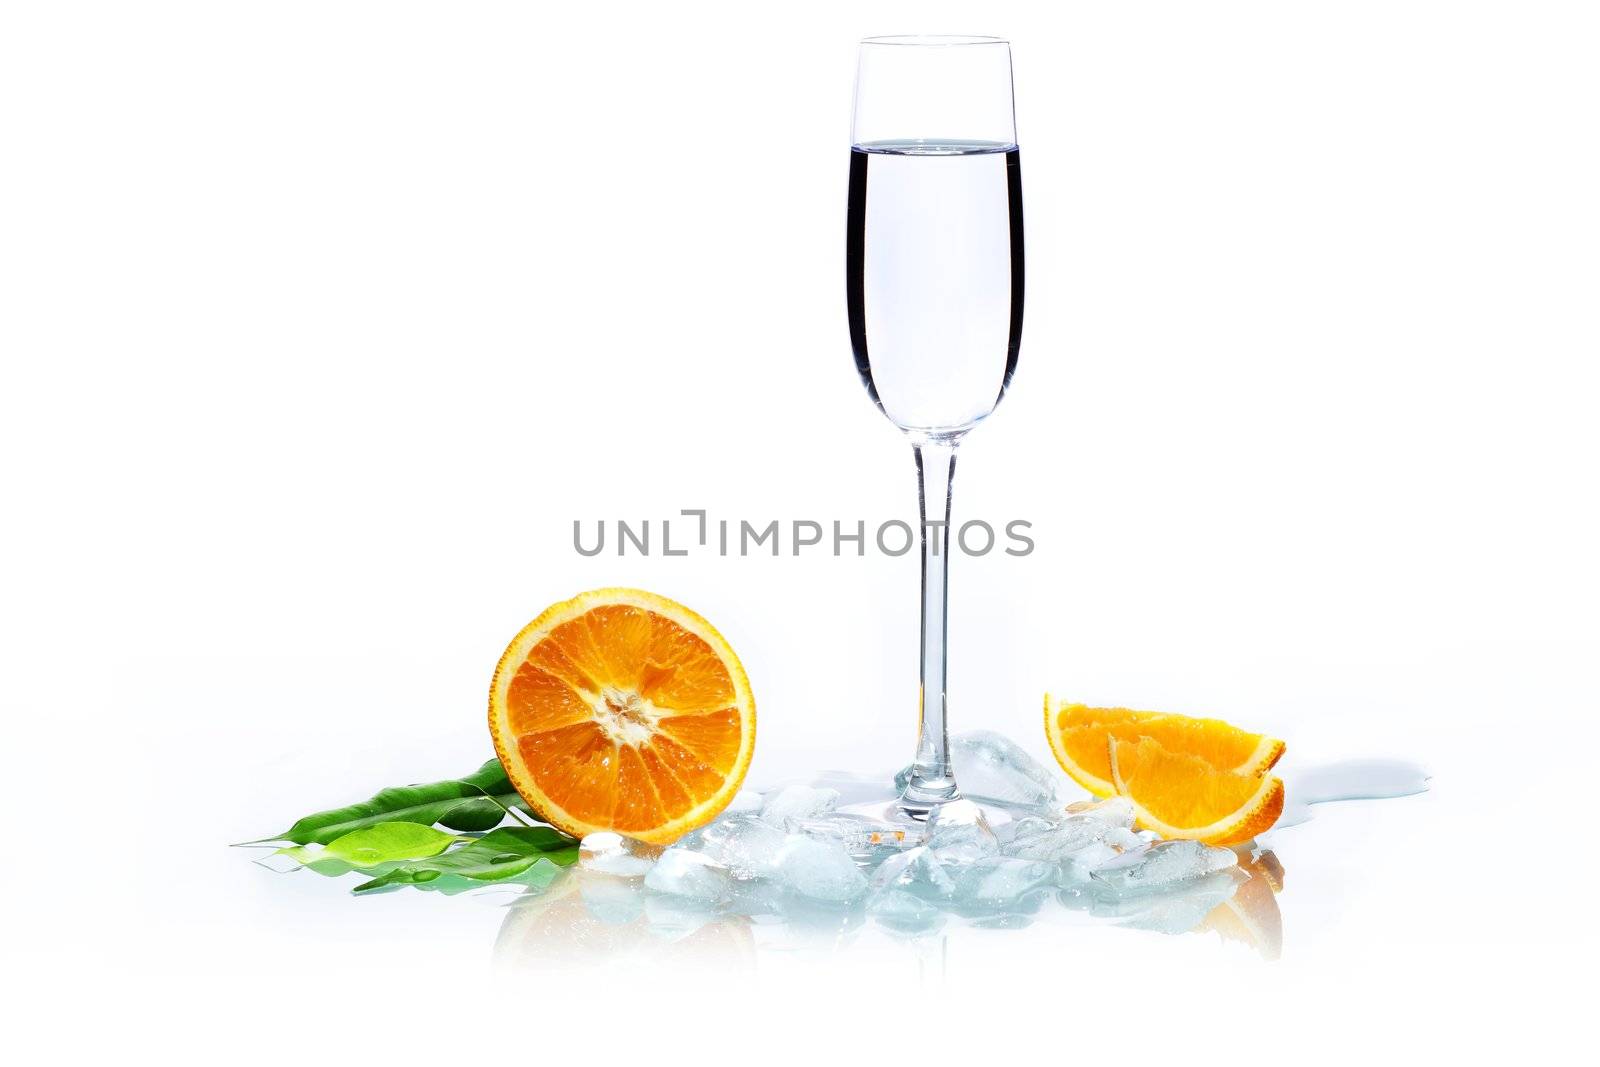 Vodka and orange by sergey_nivens